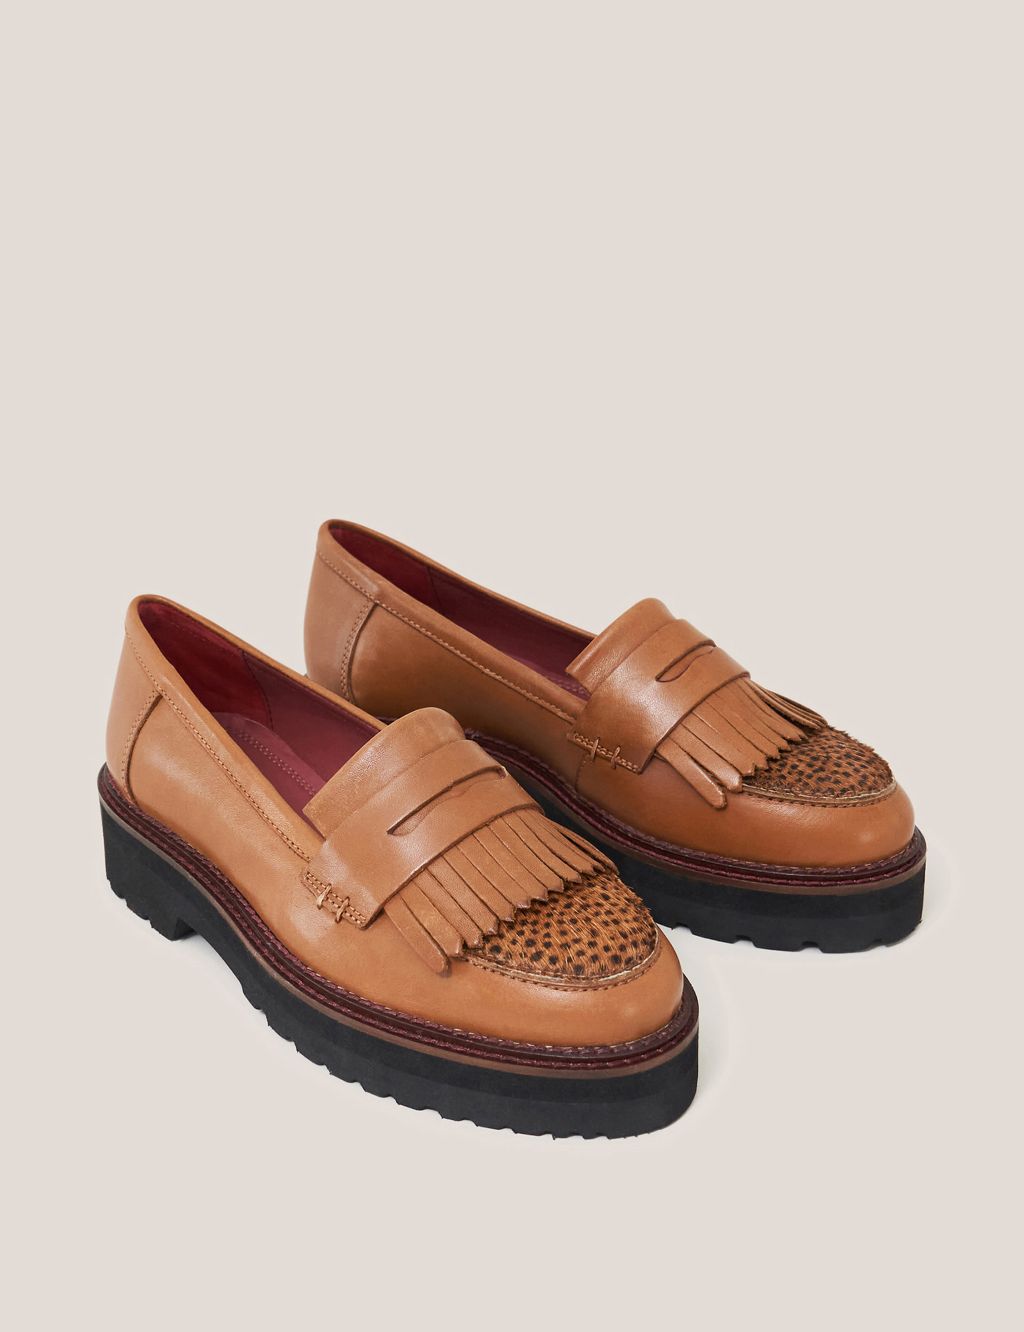 Leather Slip On Chunky Flatform Loafers image 2